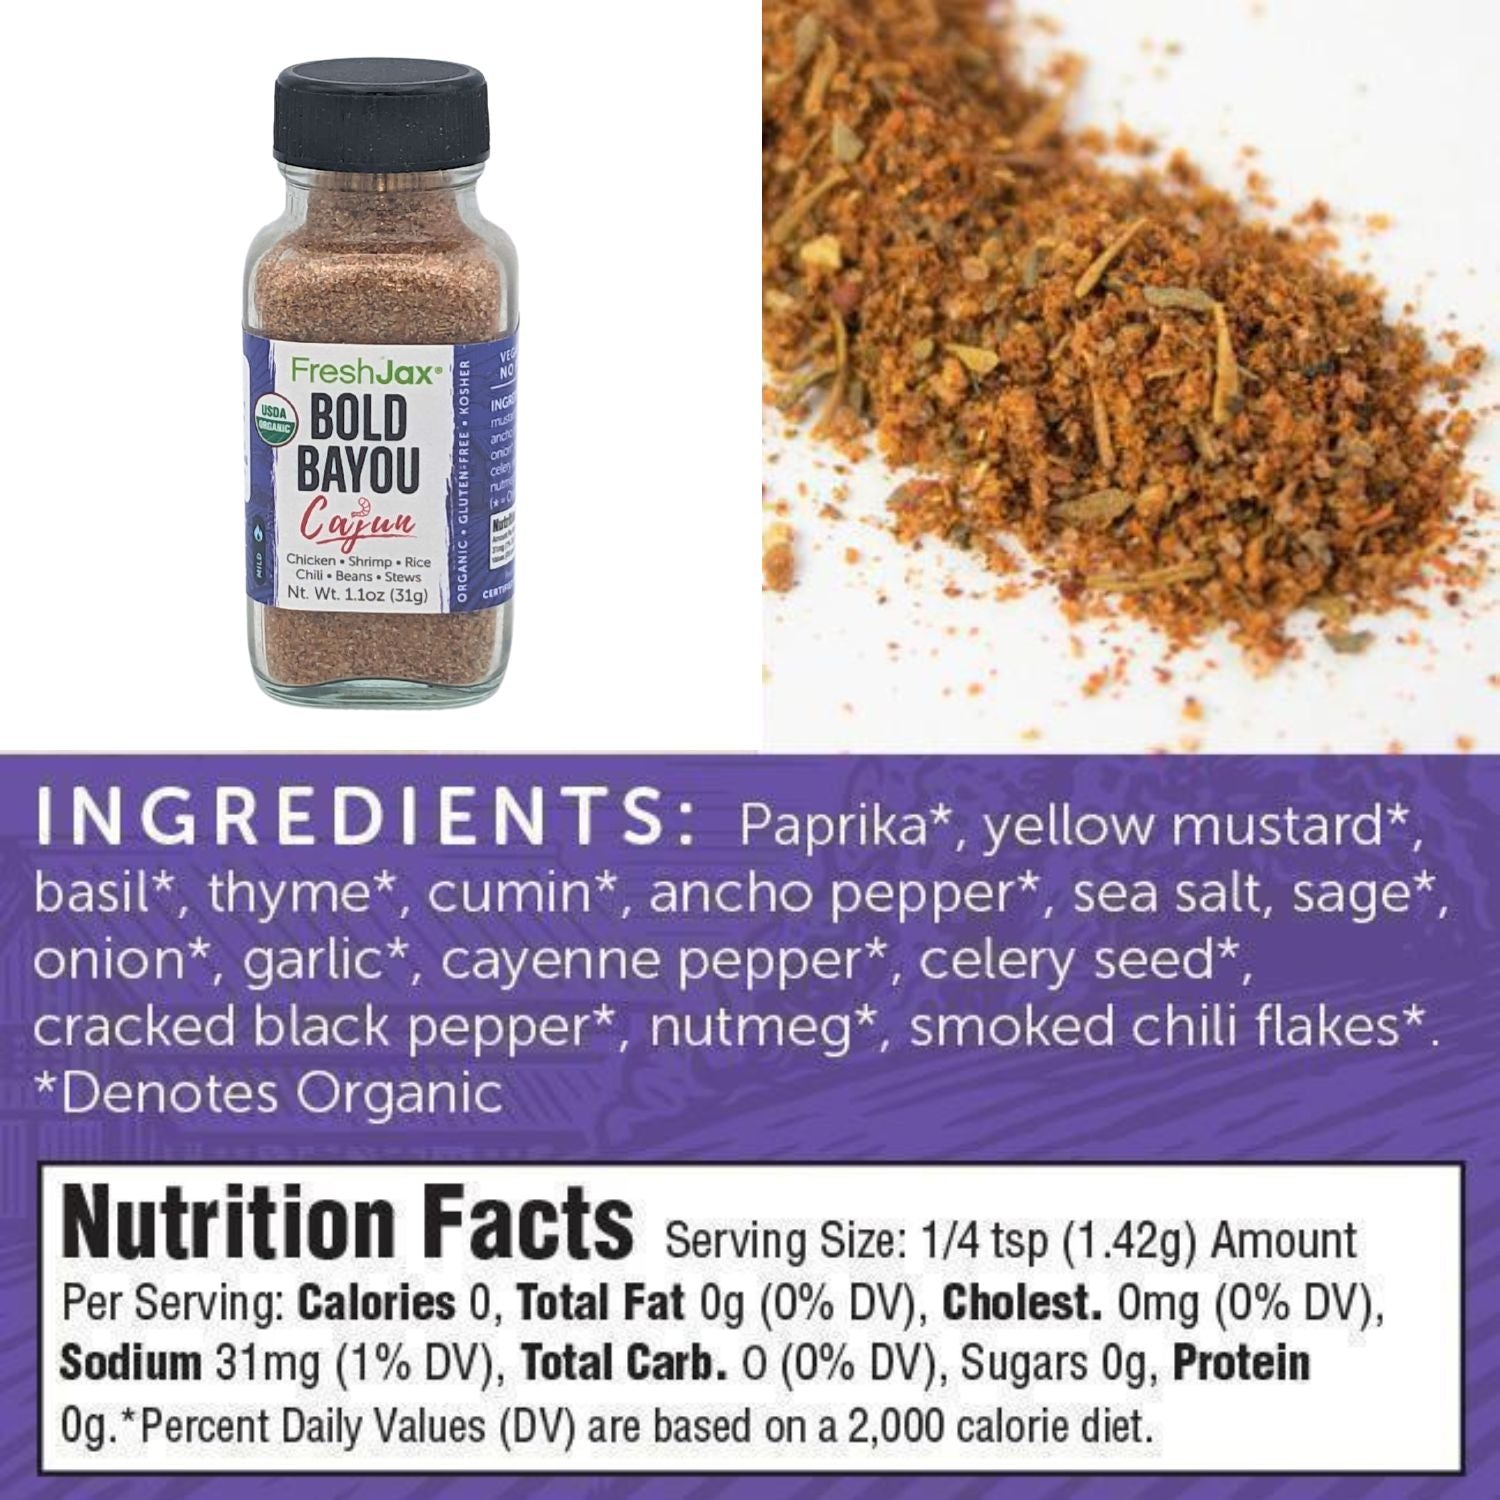 FreshJax Organic Spices Blod Bayou Cajun Seasoning Ingredients and Nutrition Information